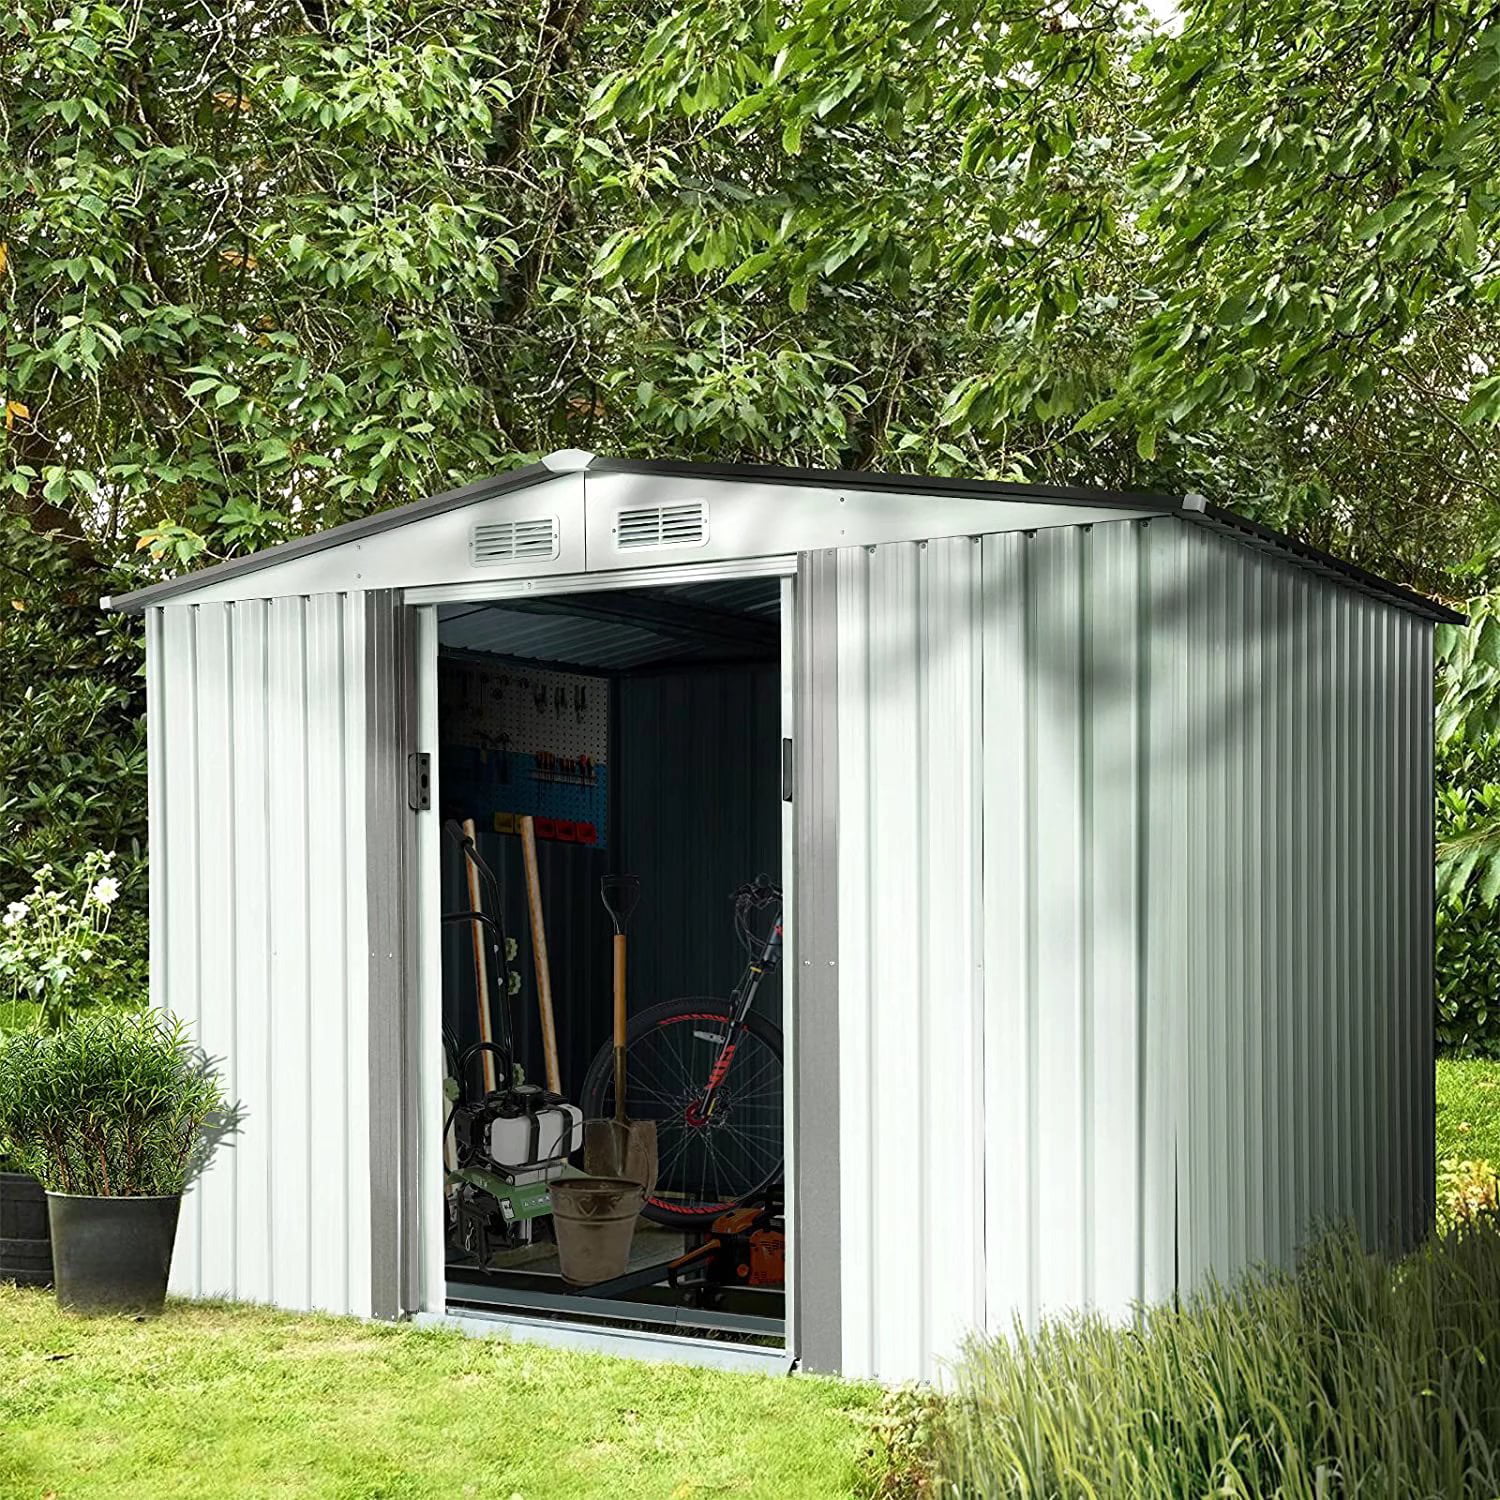 Without Floor Frame Aoxun 4 x 6 Metal Outdoor Garden Storage Shed Outdoor Tool House with Sliding Door for Backyard Garden Lawn Equipment